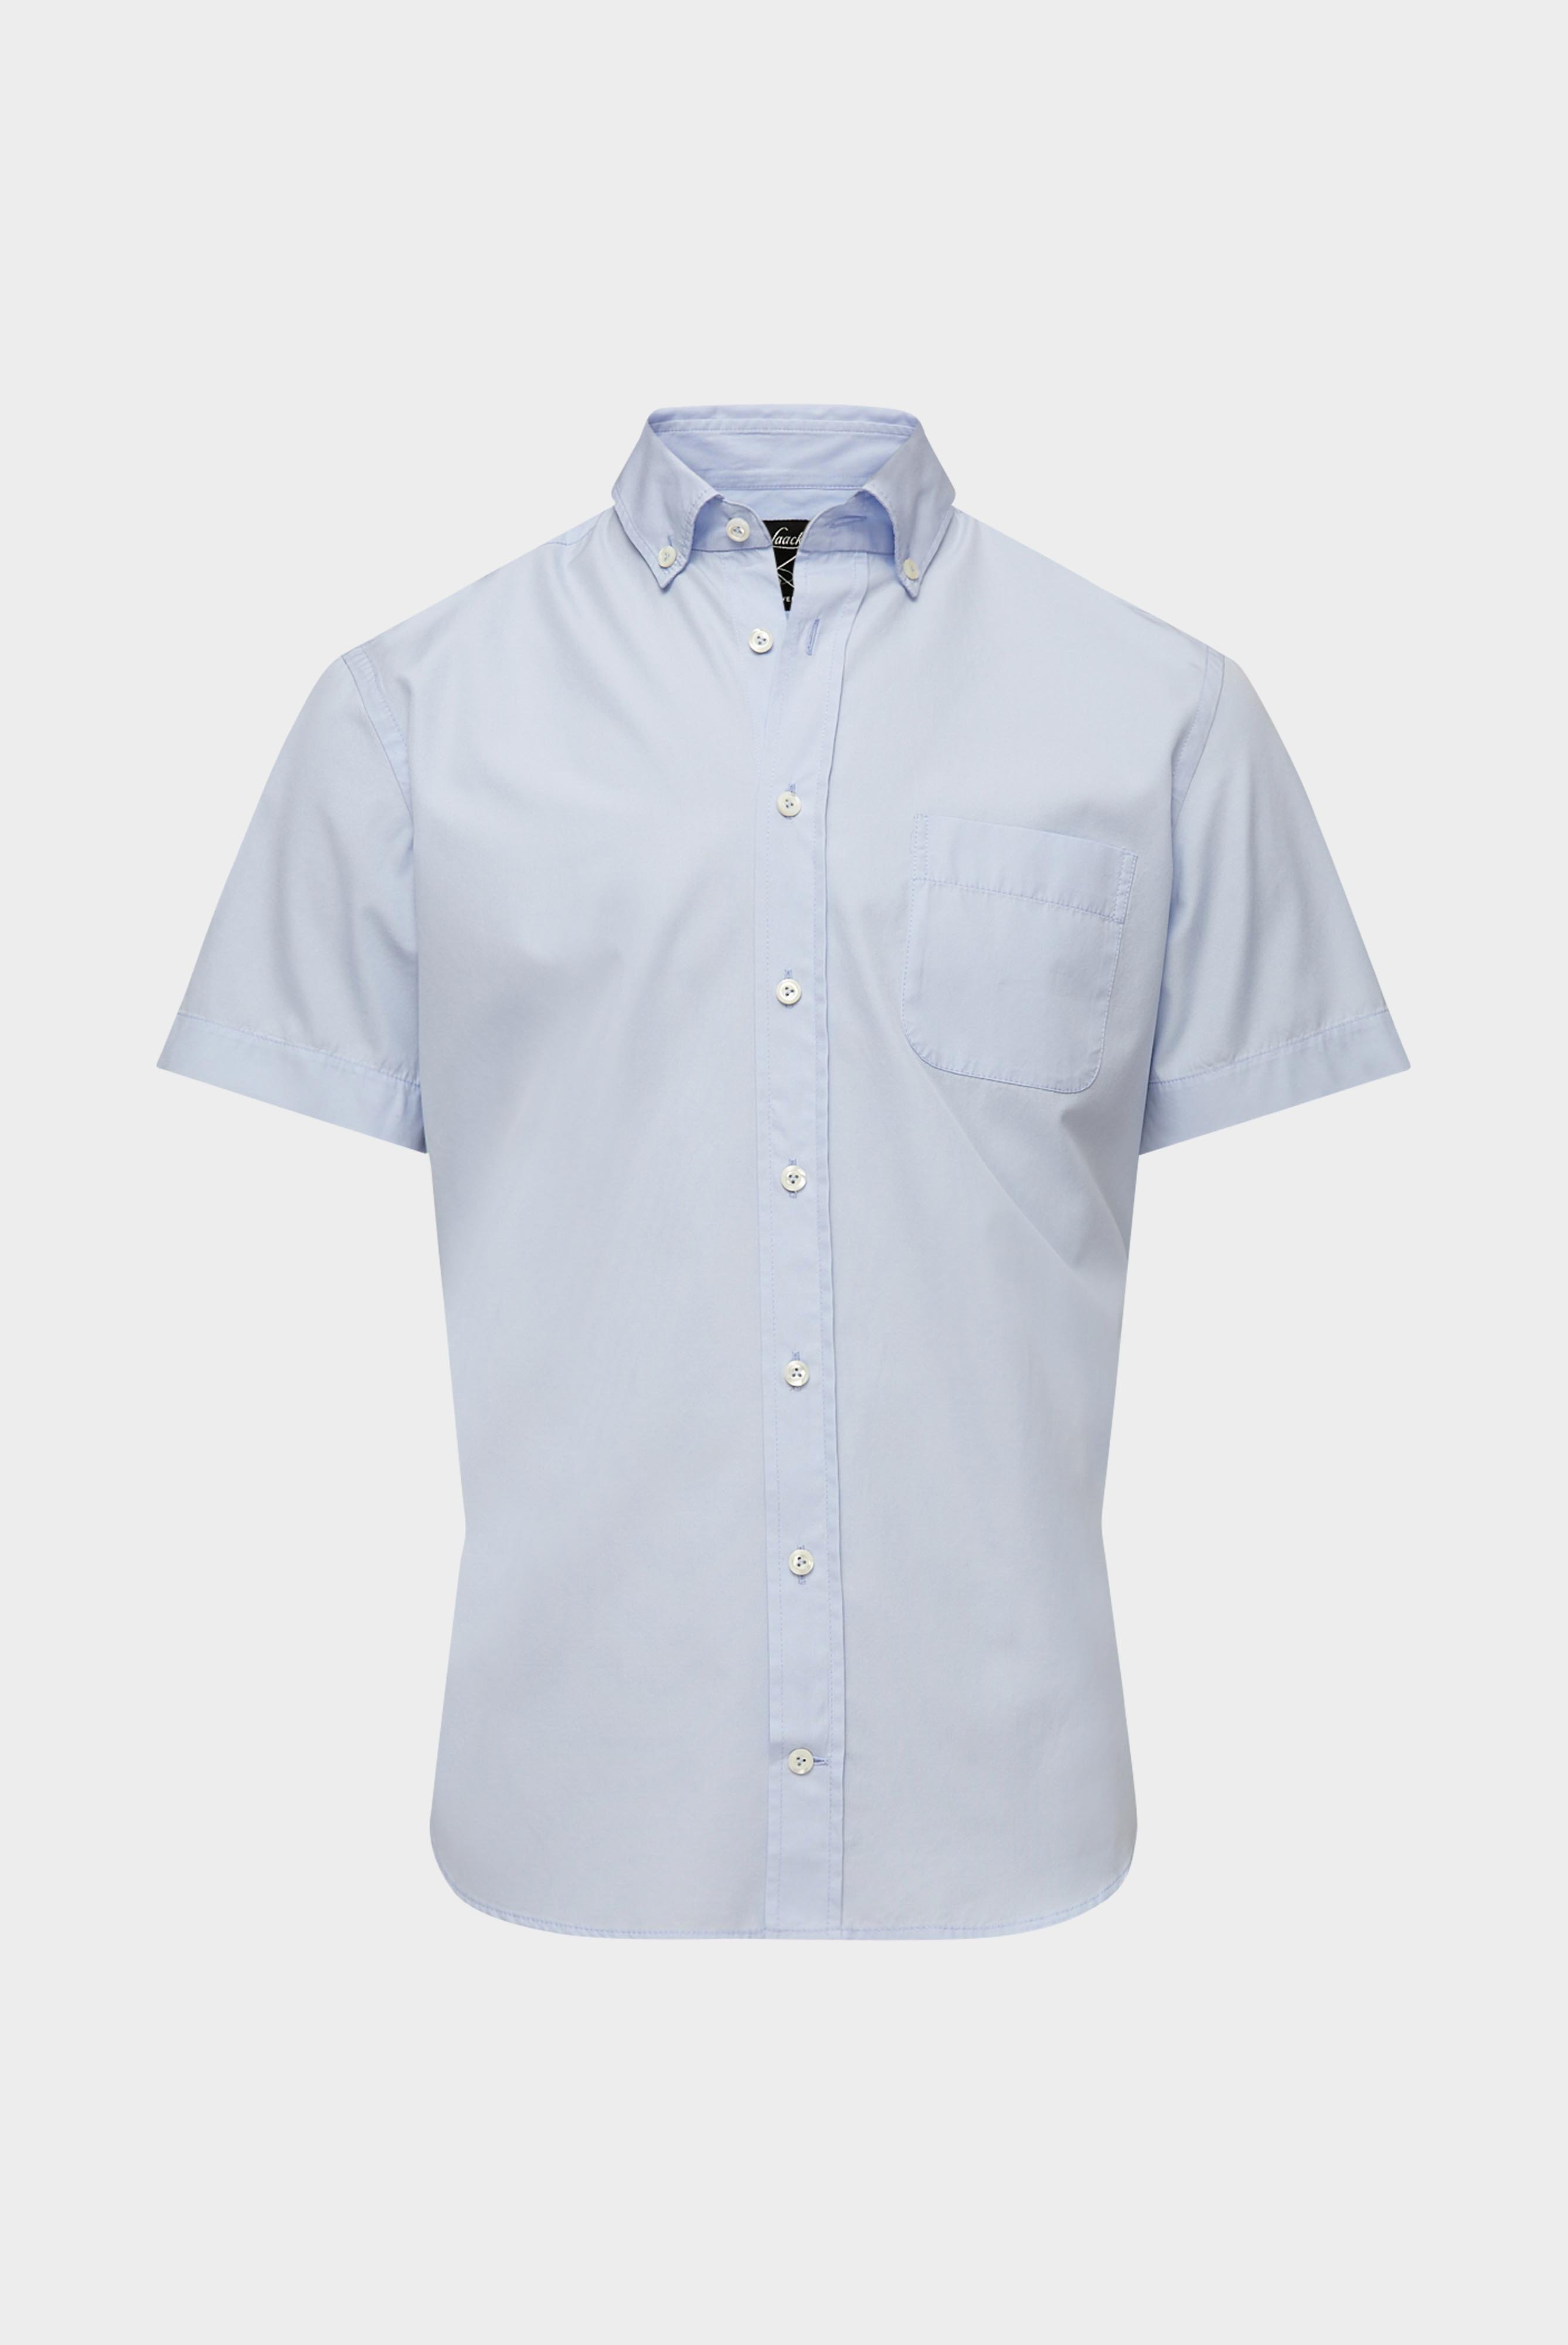 Casual Shirts+Short-sleeved shirt in cotton poplin+20.2053.Q2.130648.715.41